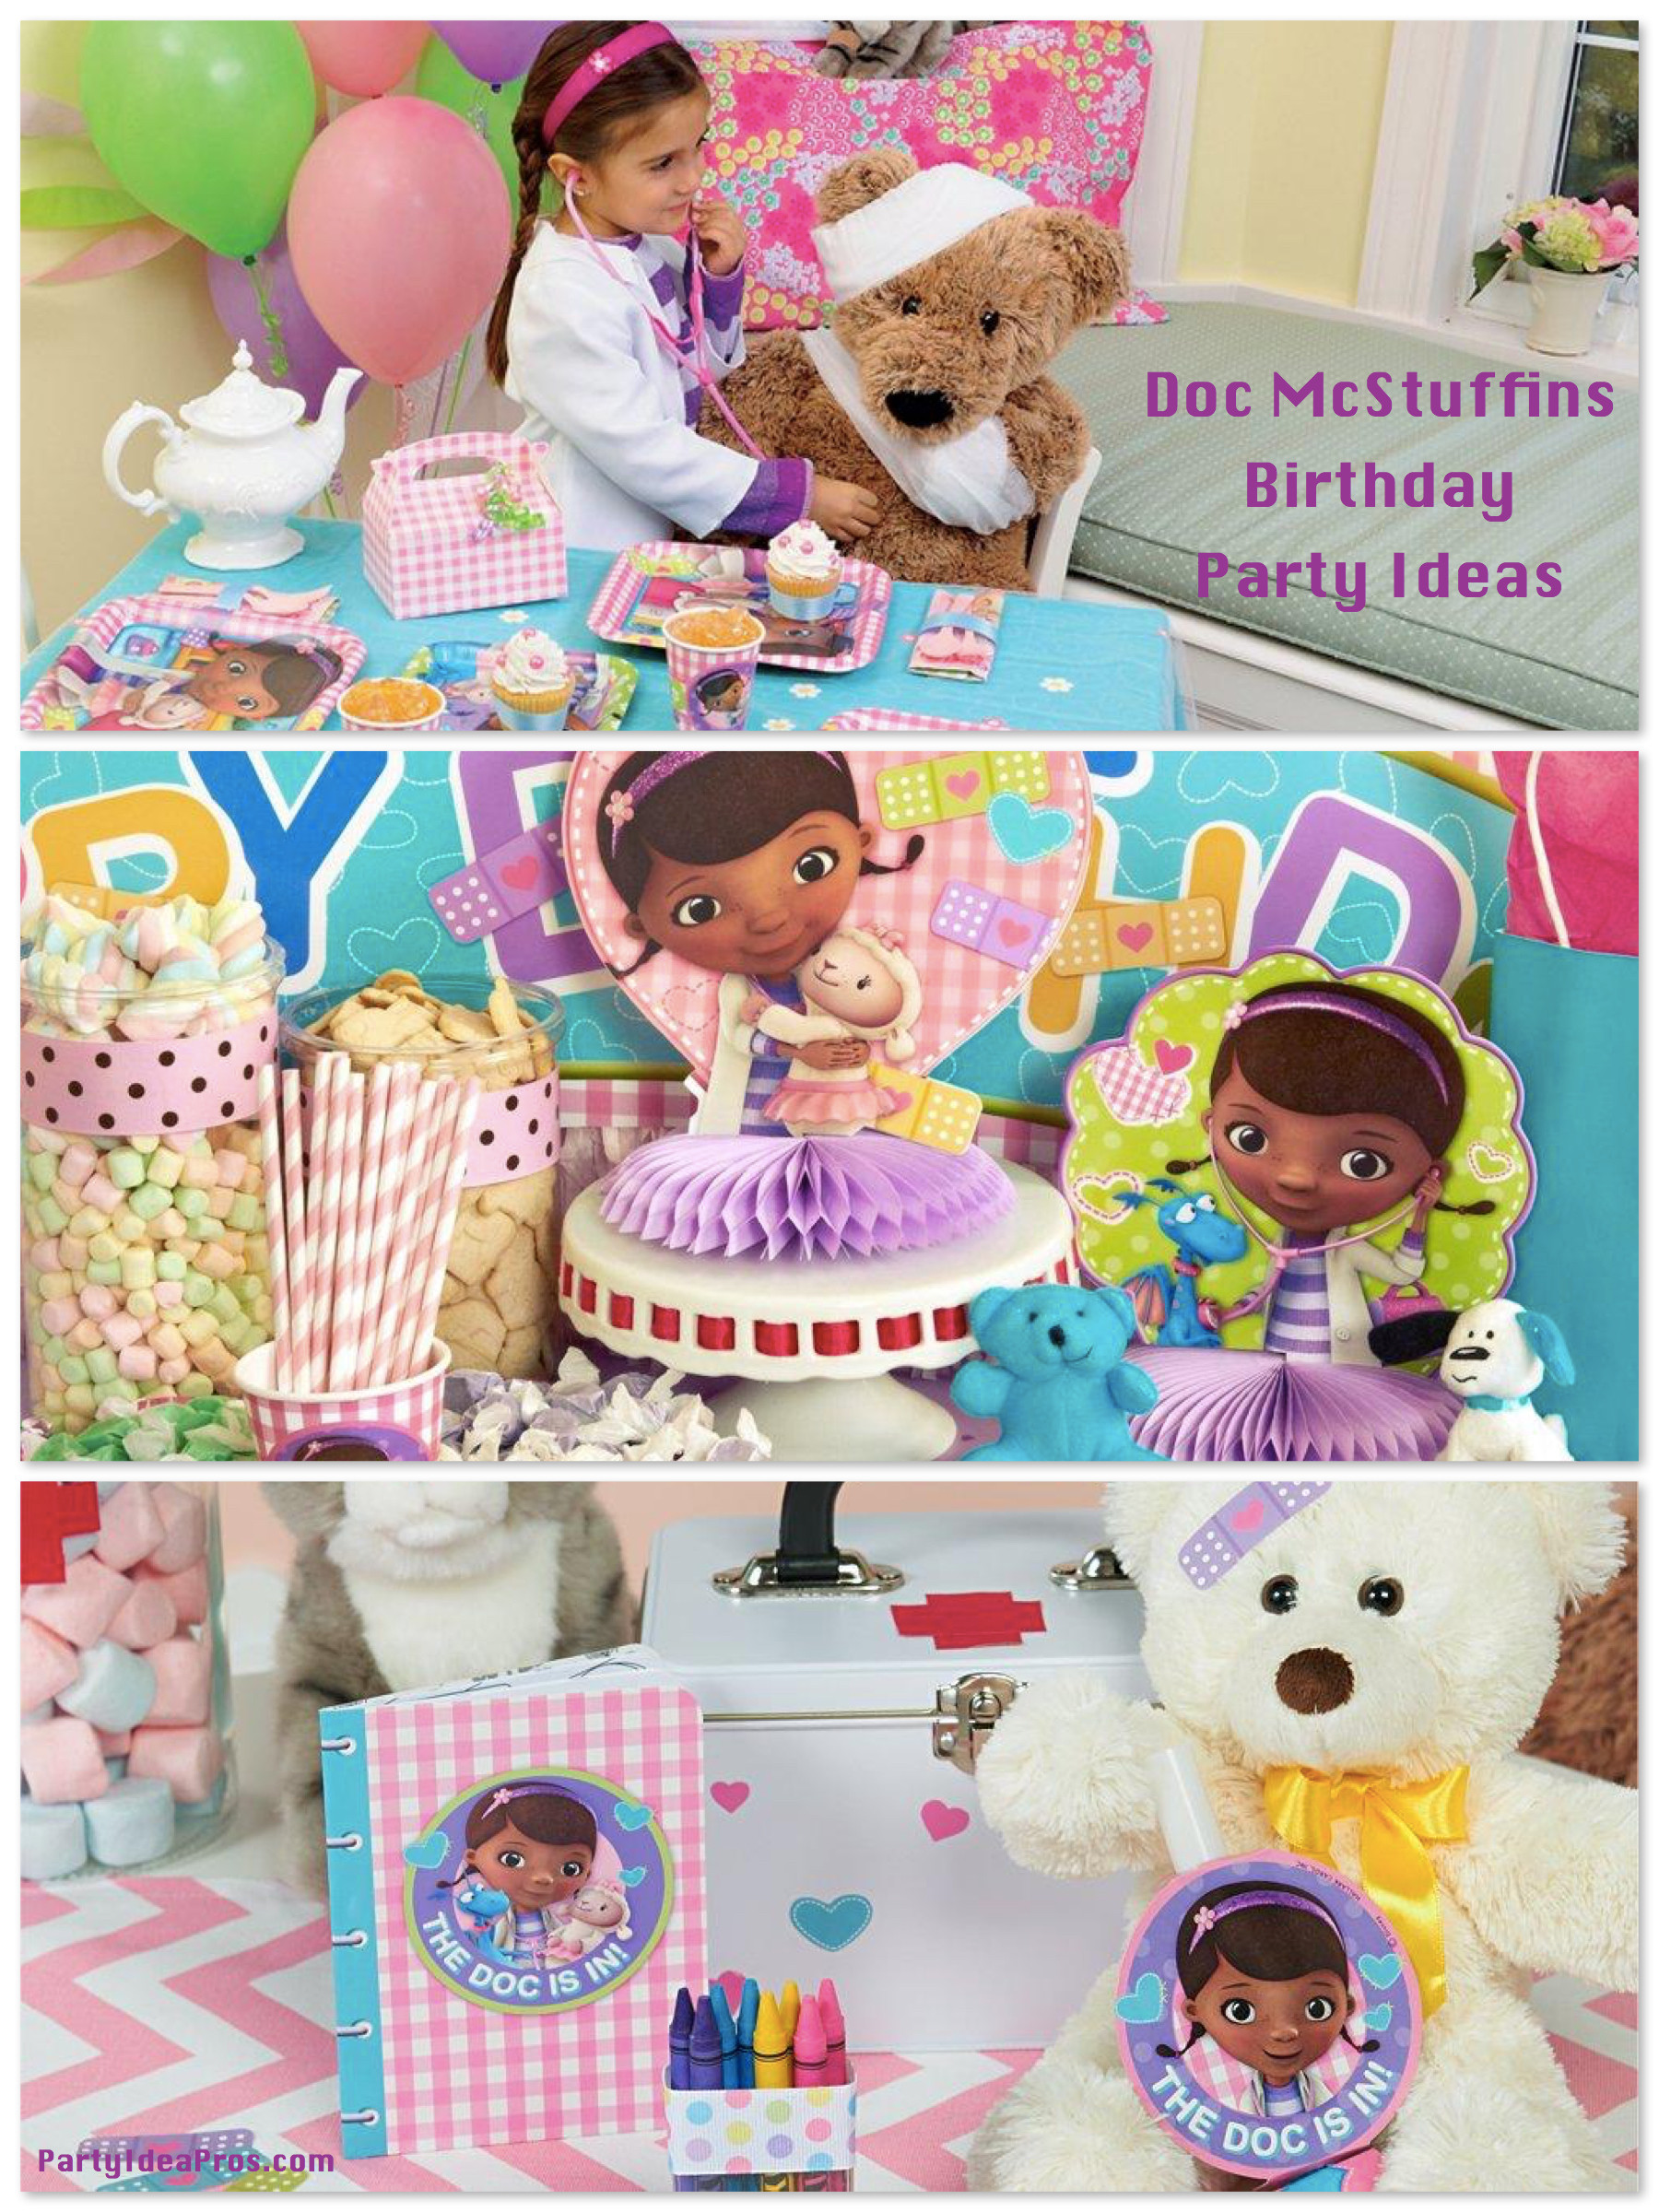 Doc Mcstuffins Birthday Party Decorations
 Doc McStuffins Birthday Party Planning Ideas & Supplies